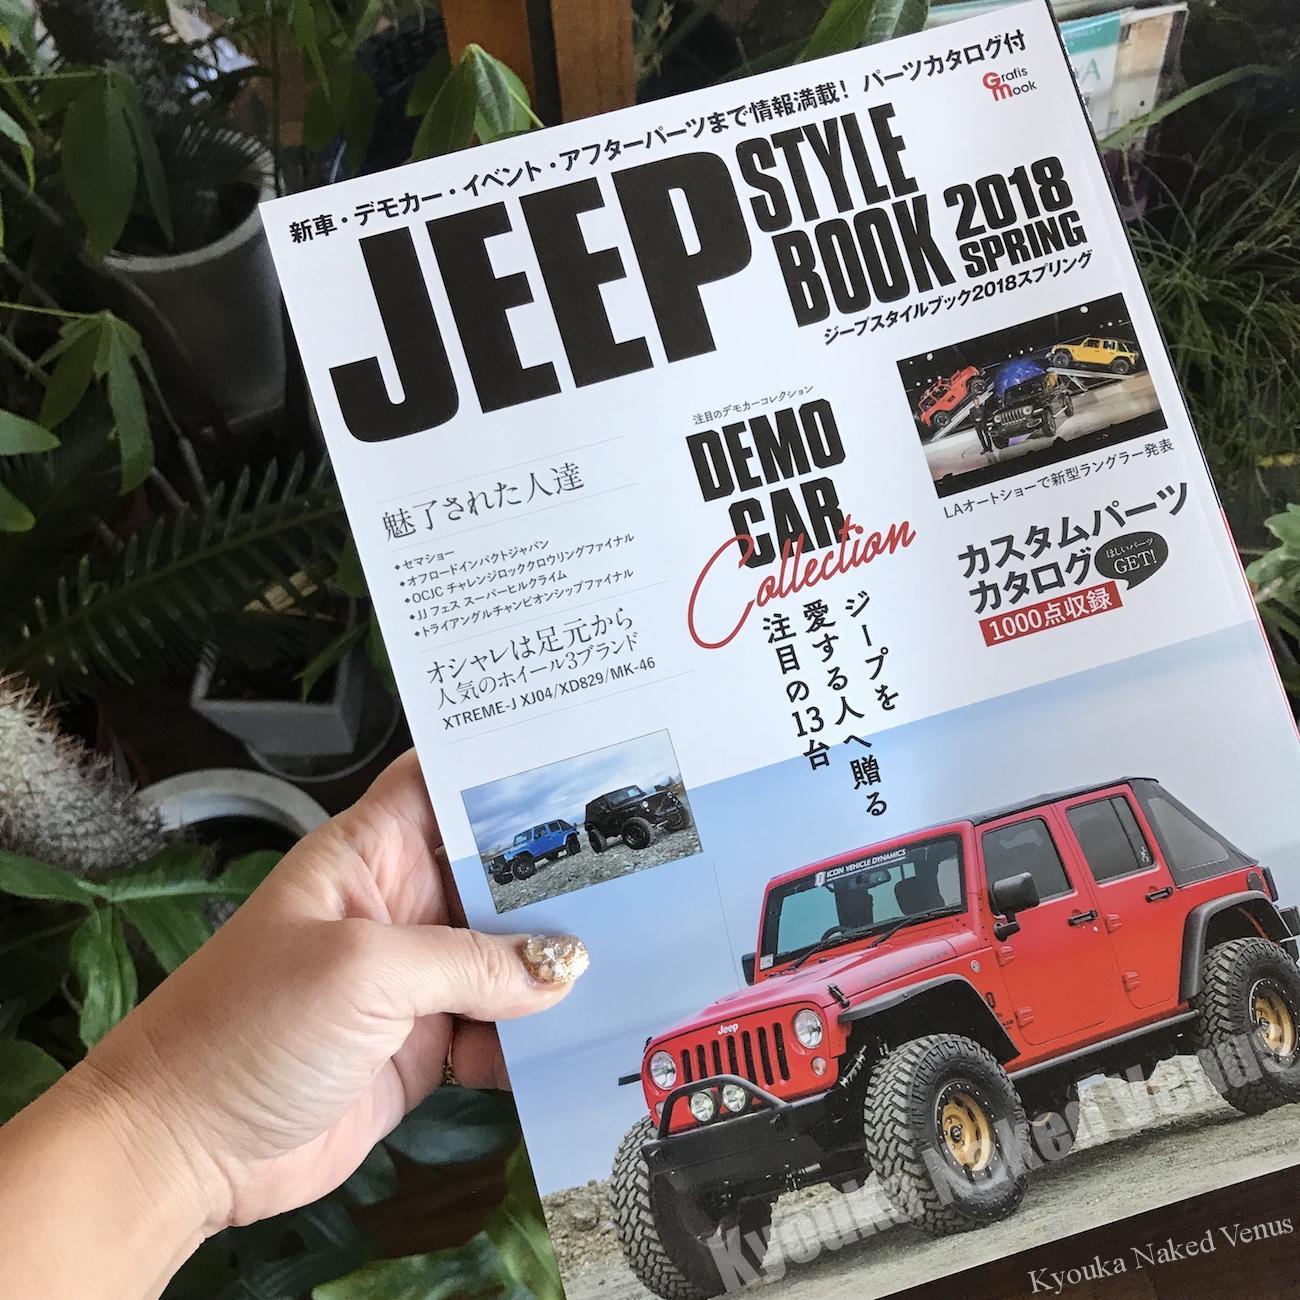 【記事掲載】Jeep Style Book 2018 Spring